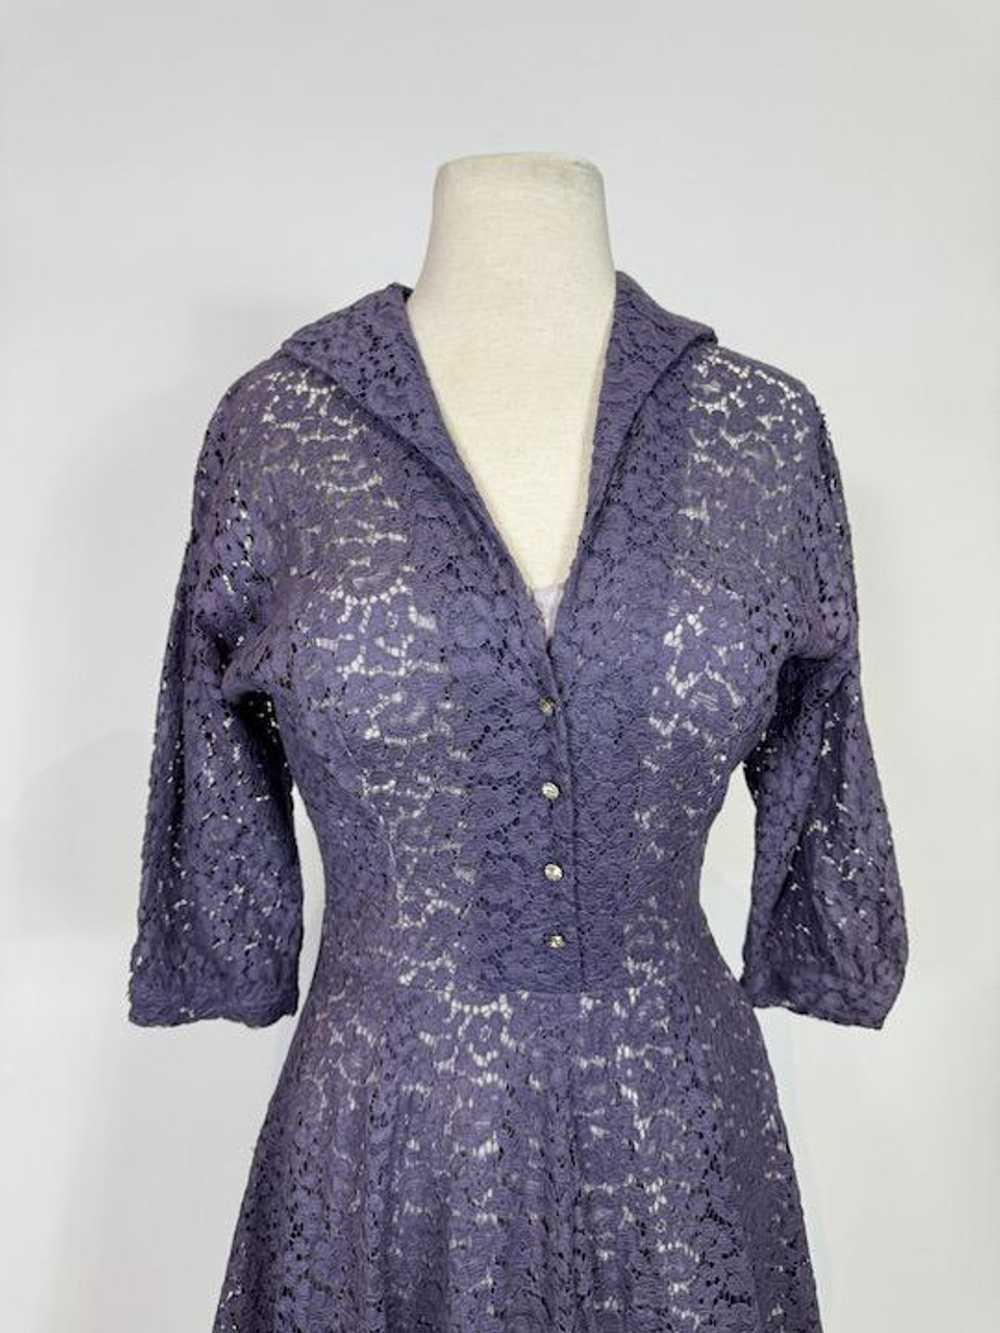 1940s - 1950s Eggplant Purple Lace Swing Dress - image 2